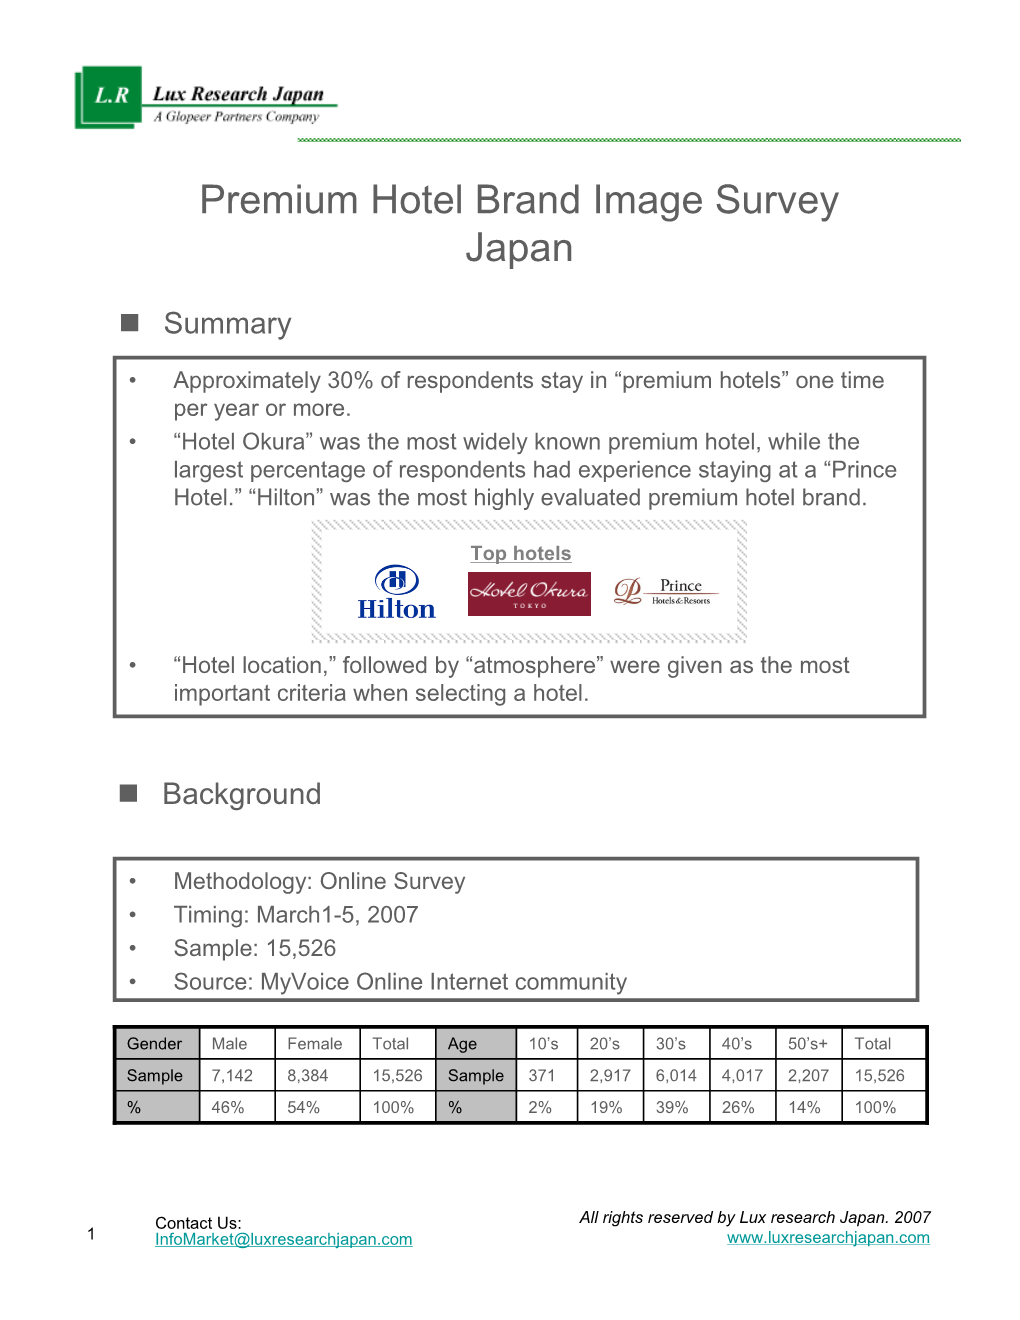 Premium Hotel Brand Image Survey Japan